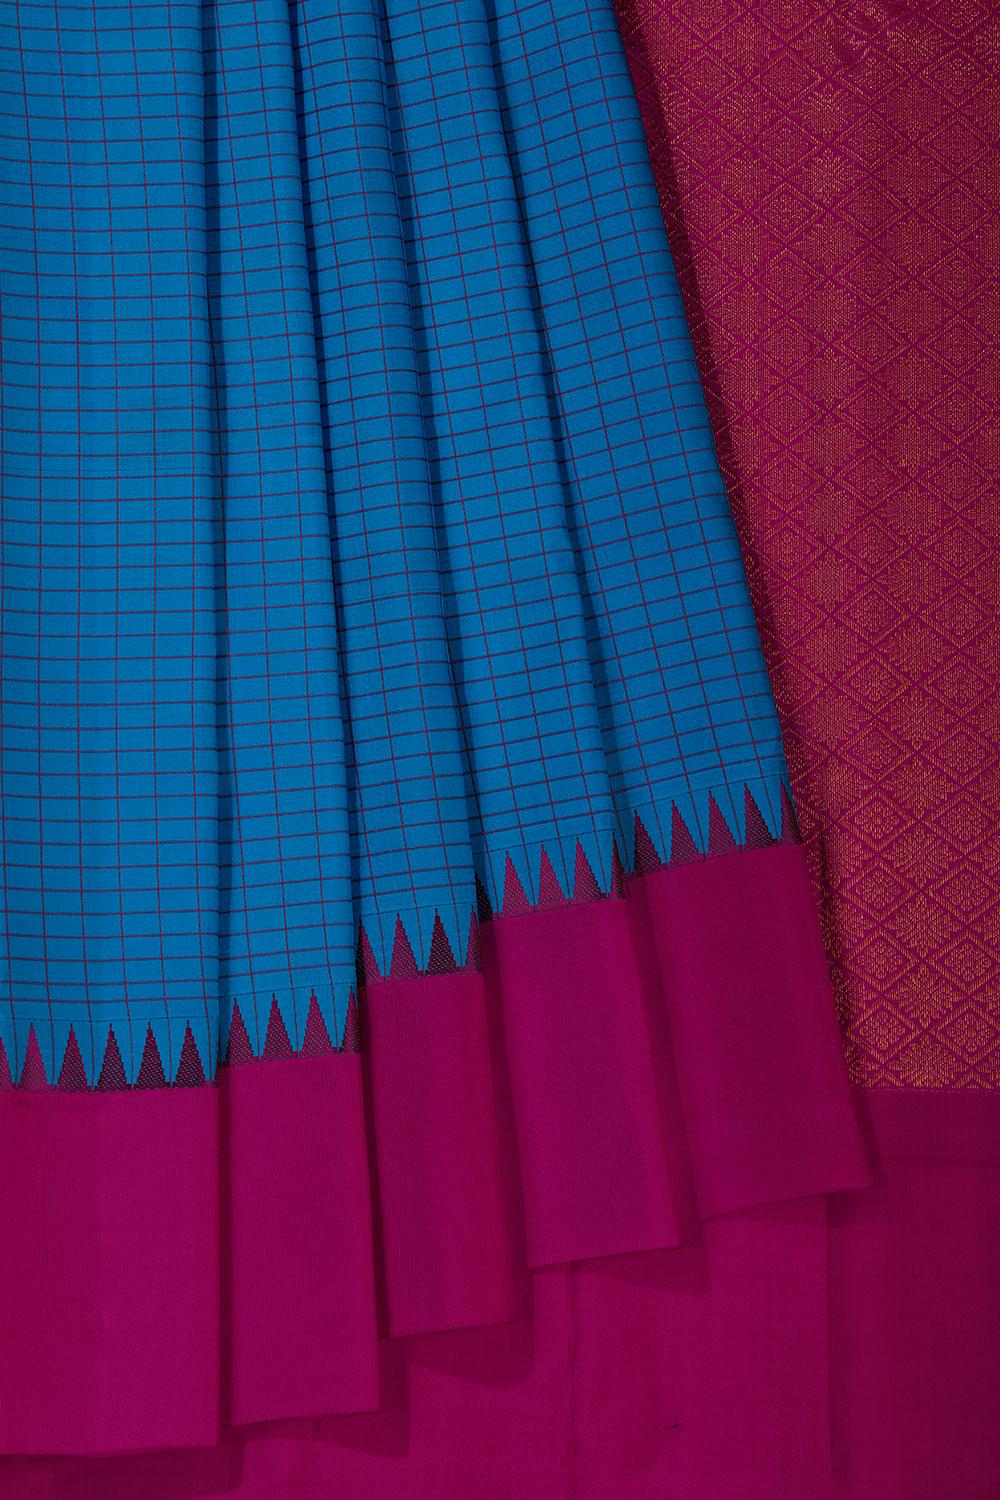 Gadwal Silk Blue Saree With Pink Pallu